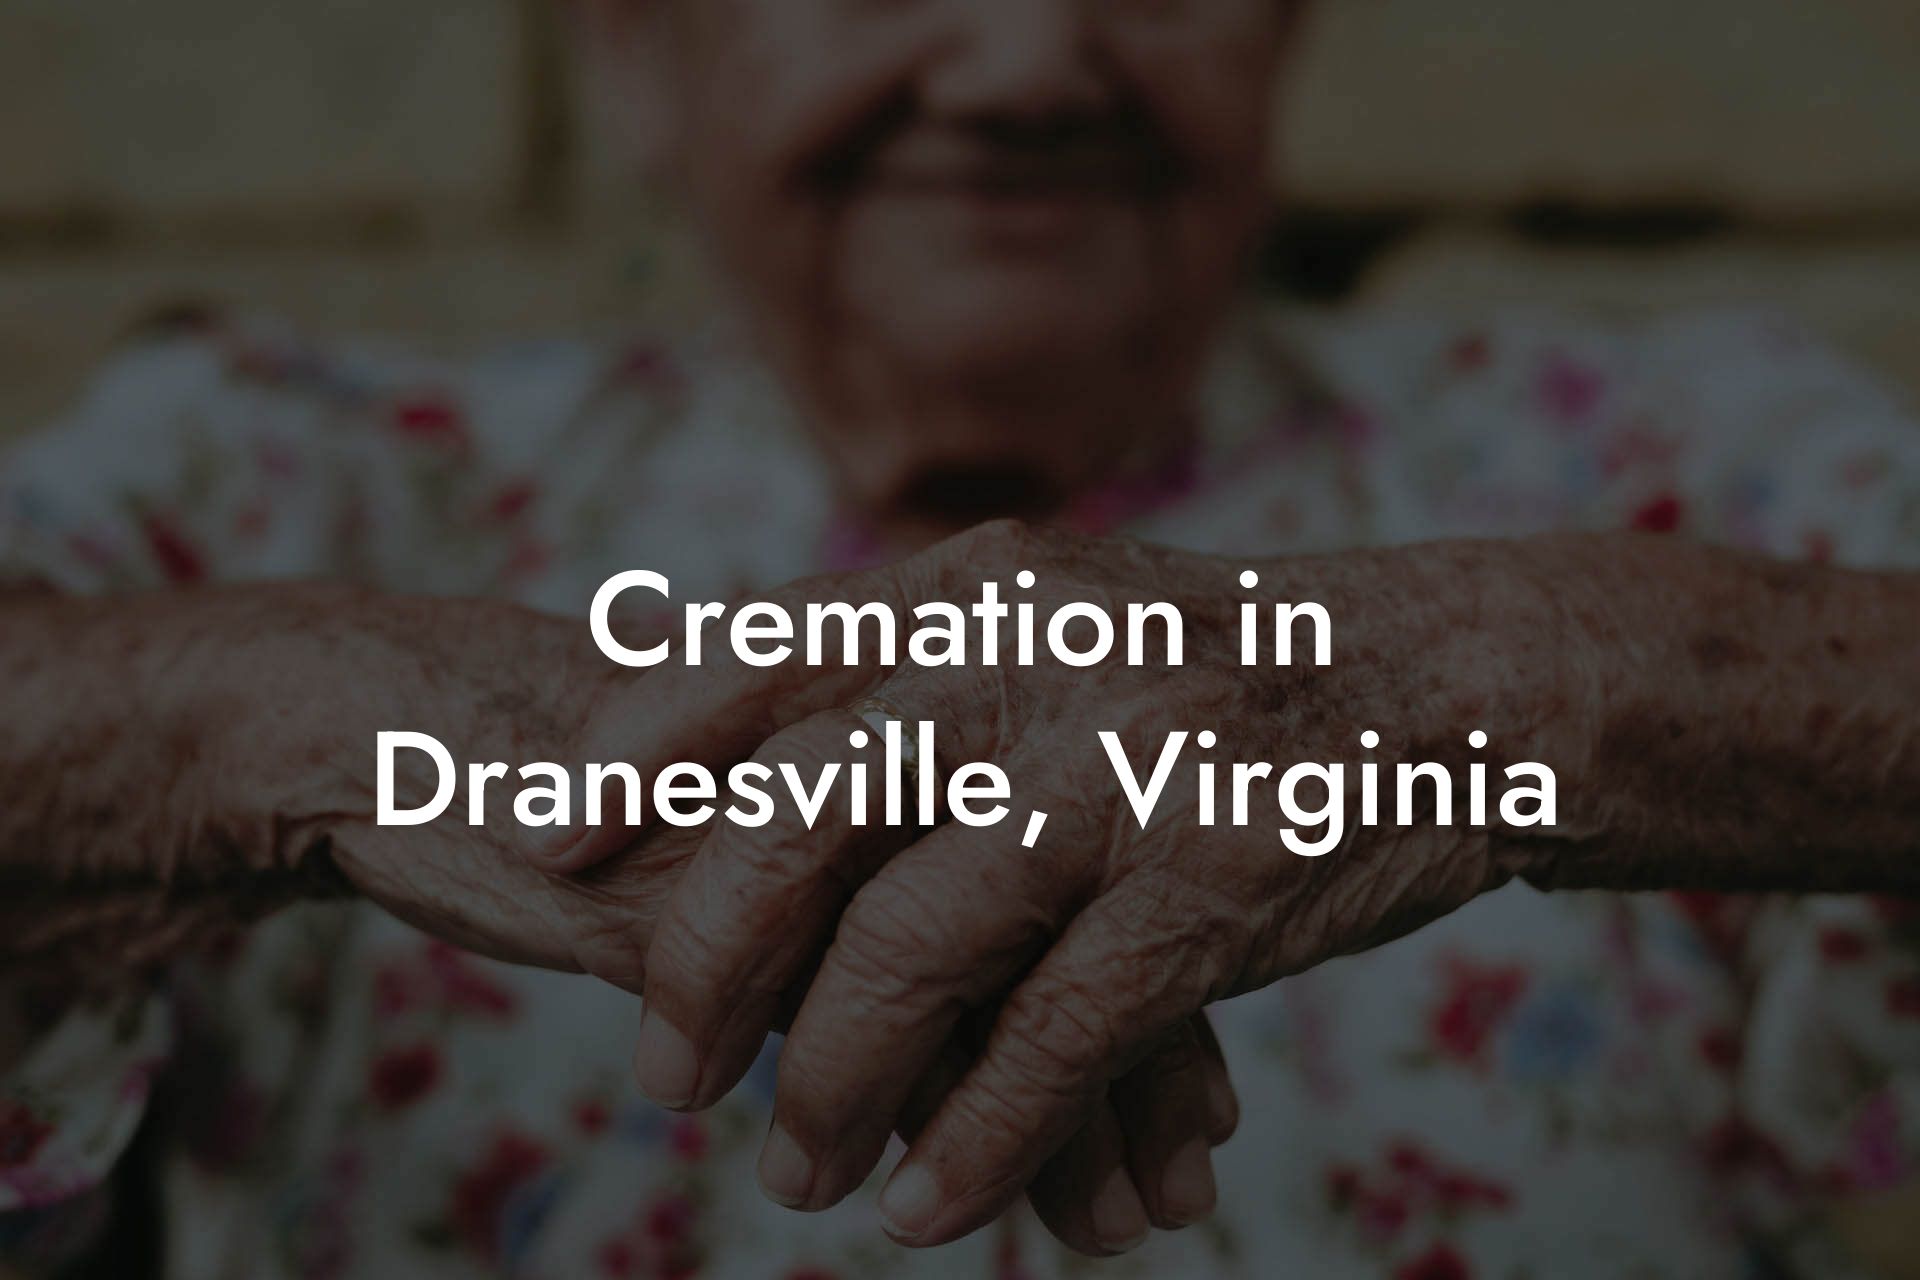 Cremation in Dranesville, Virginia